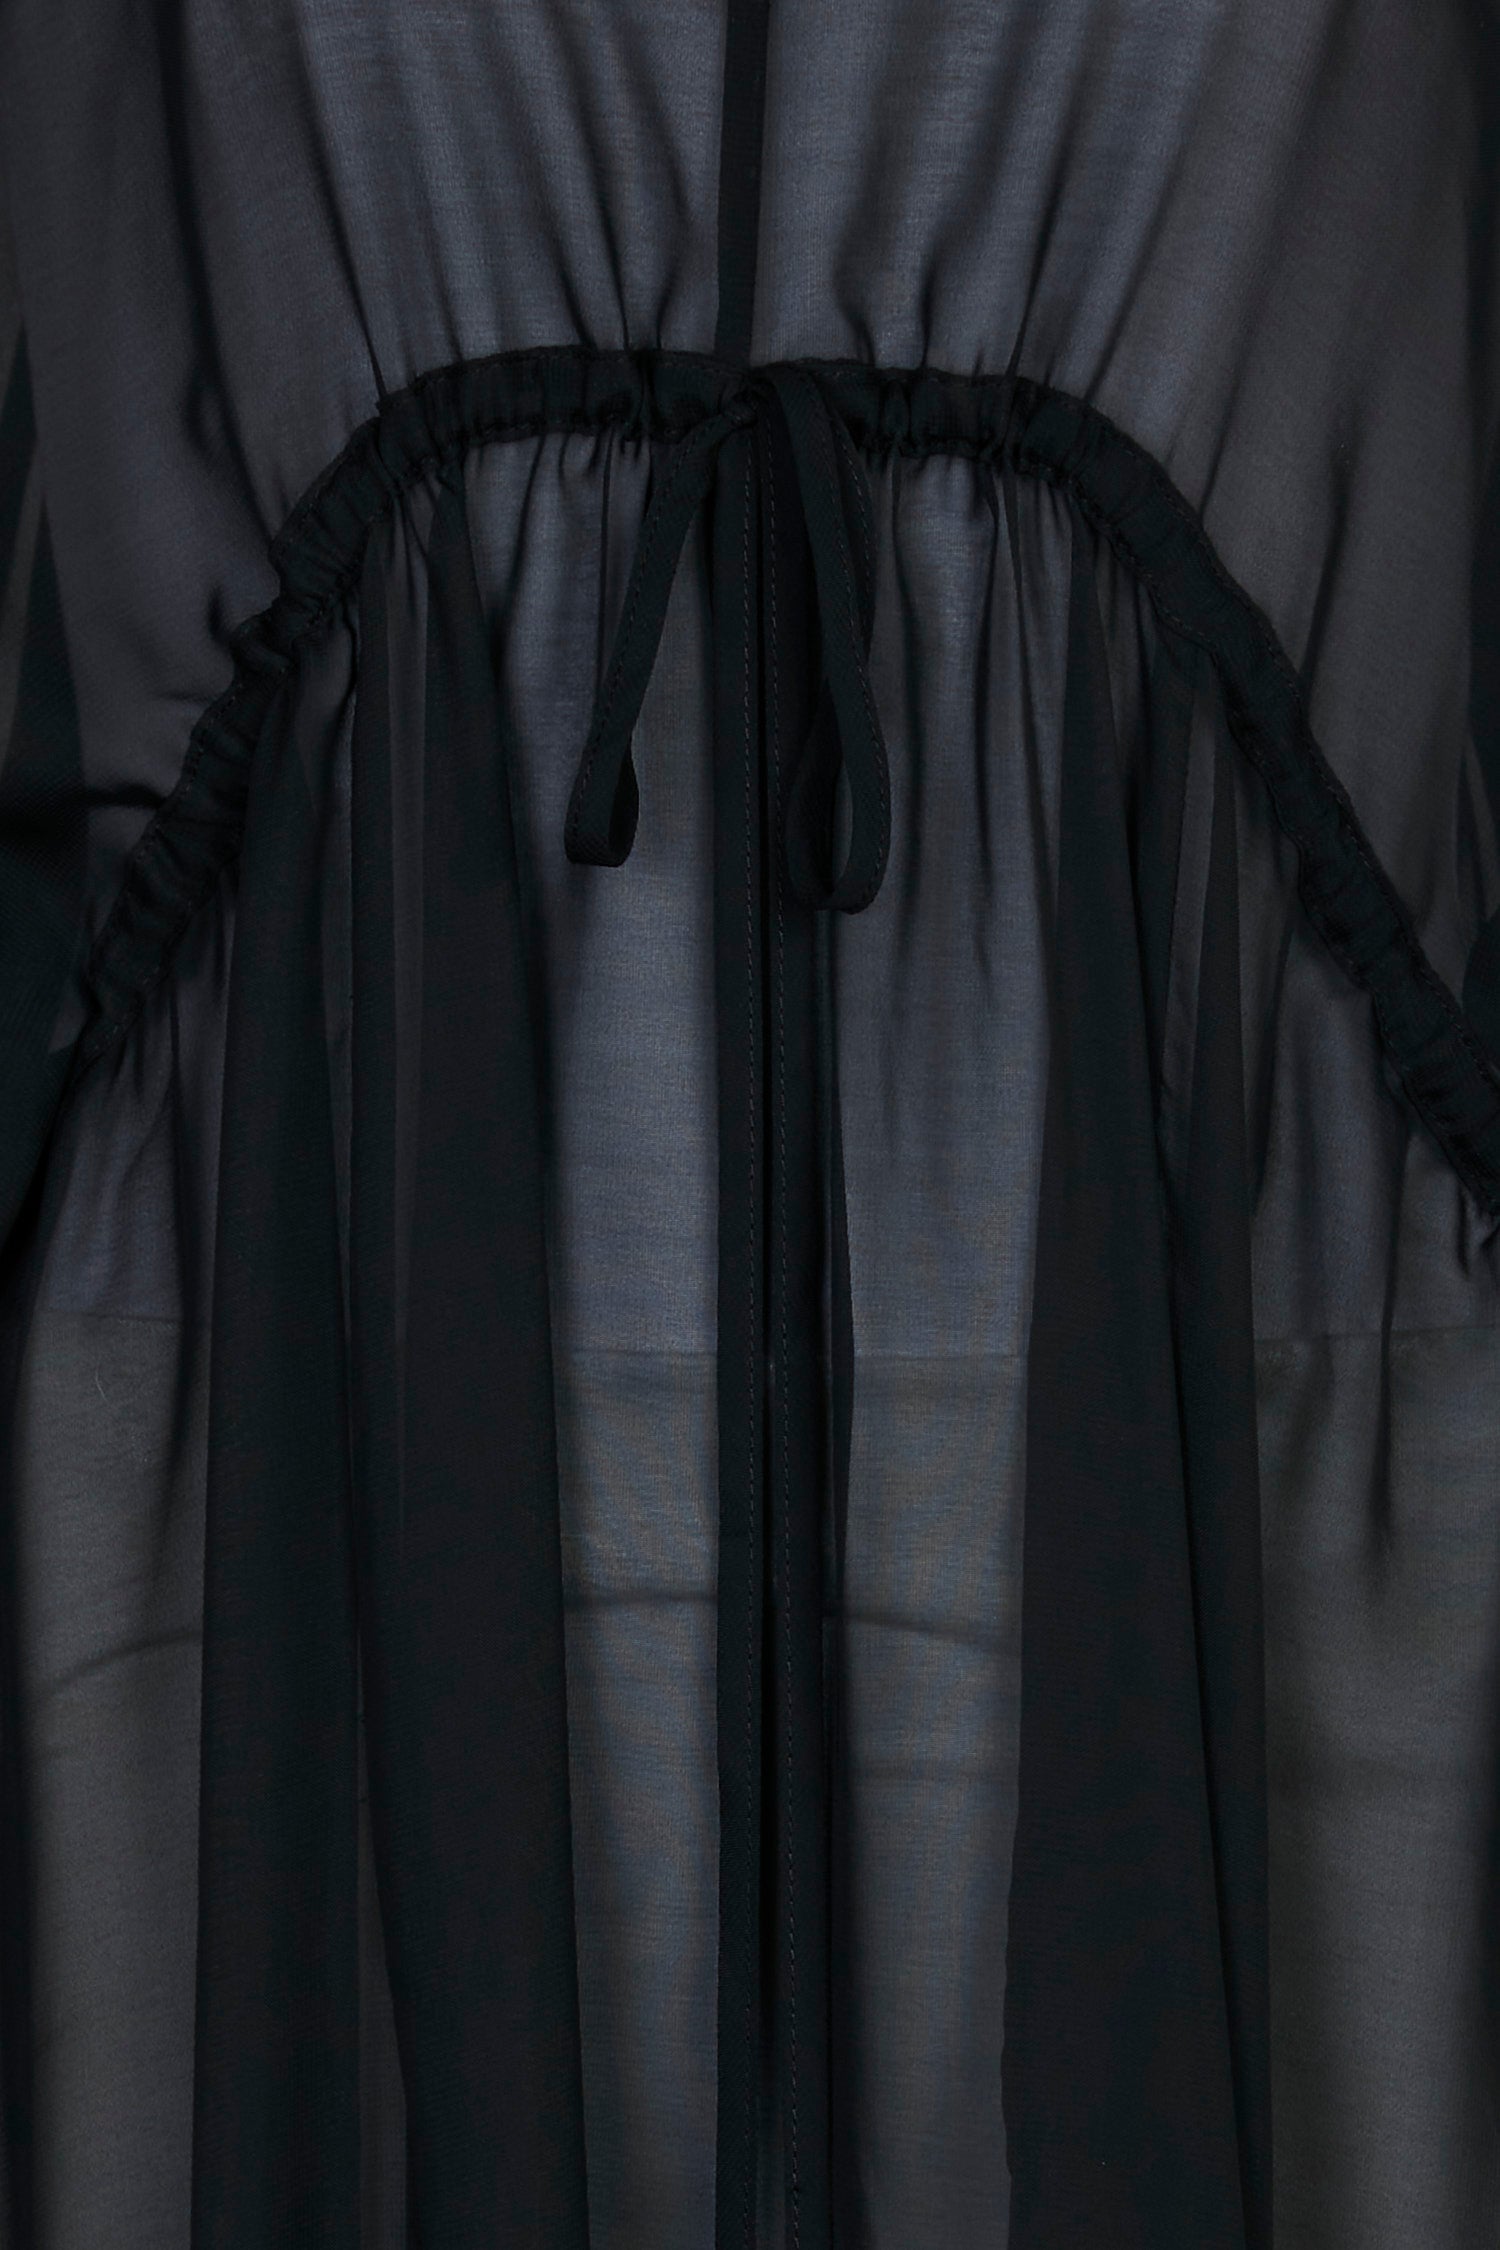 Black Sloane Dress